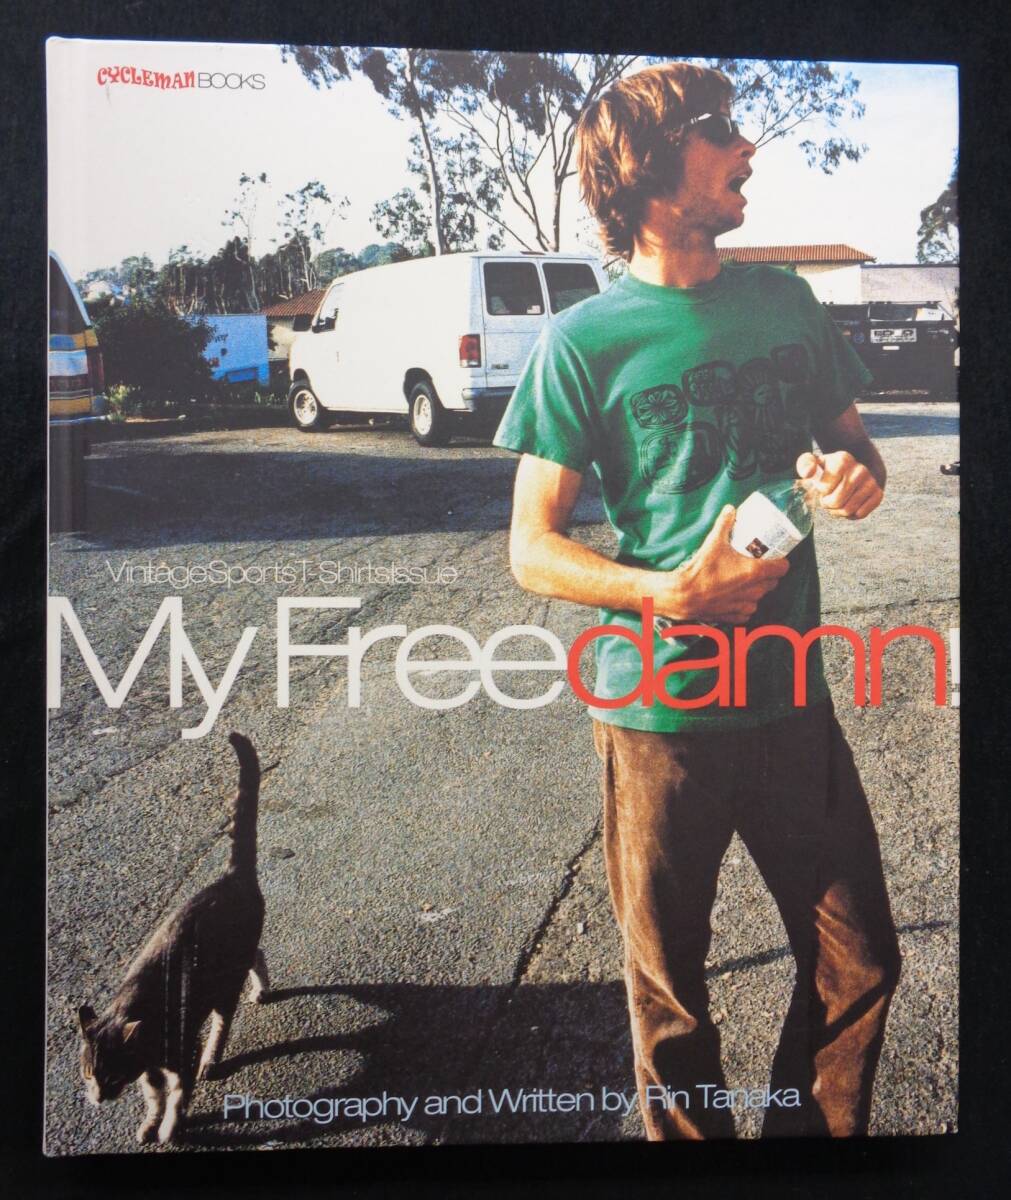  【 My Freedamn 1 】 ヴィンテージ・スポーツＴシャツ集 CYCLEMAN BOOKS_画像1